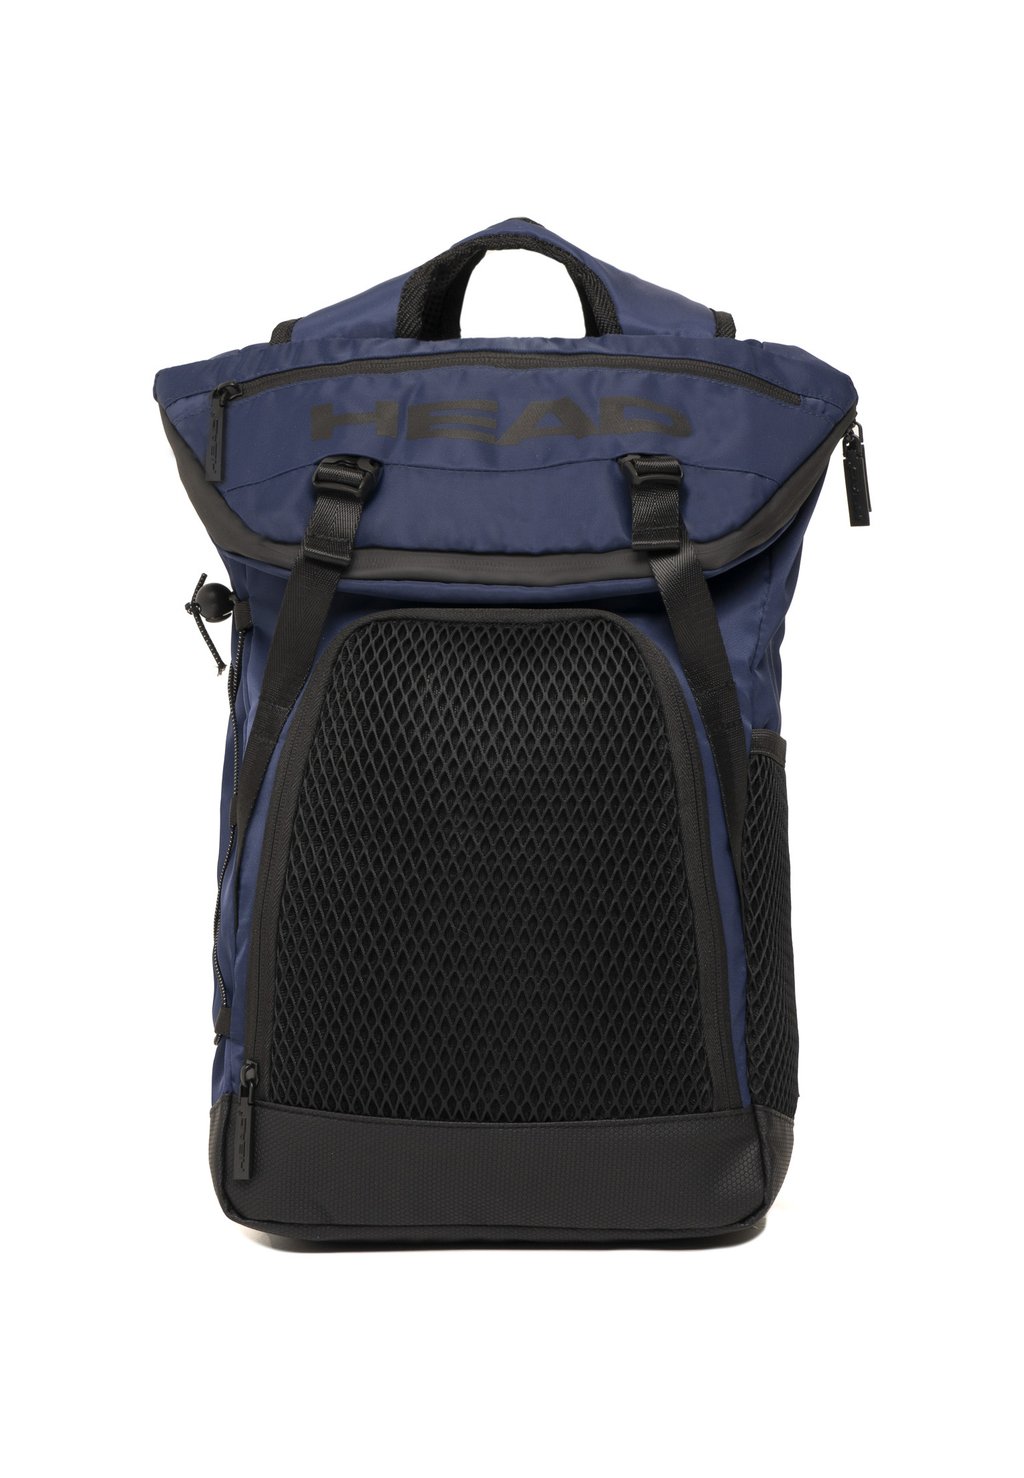 Рюкзак для путешествий Head Net Vertical, темно-синий рюкзак для путешествий head net vertical темно синий